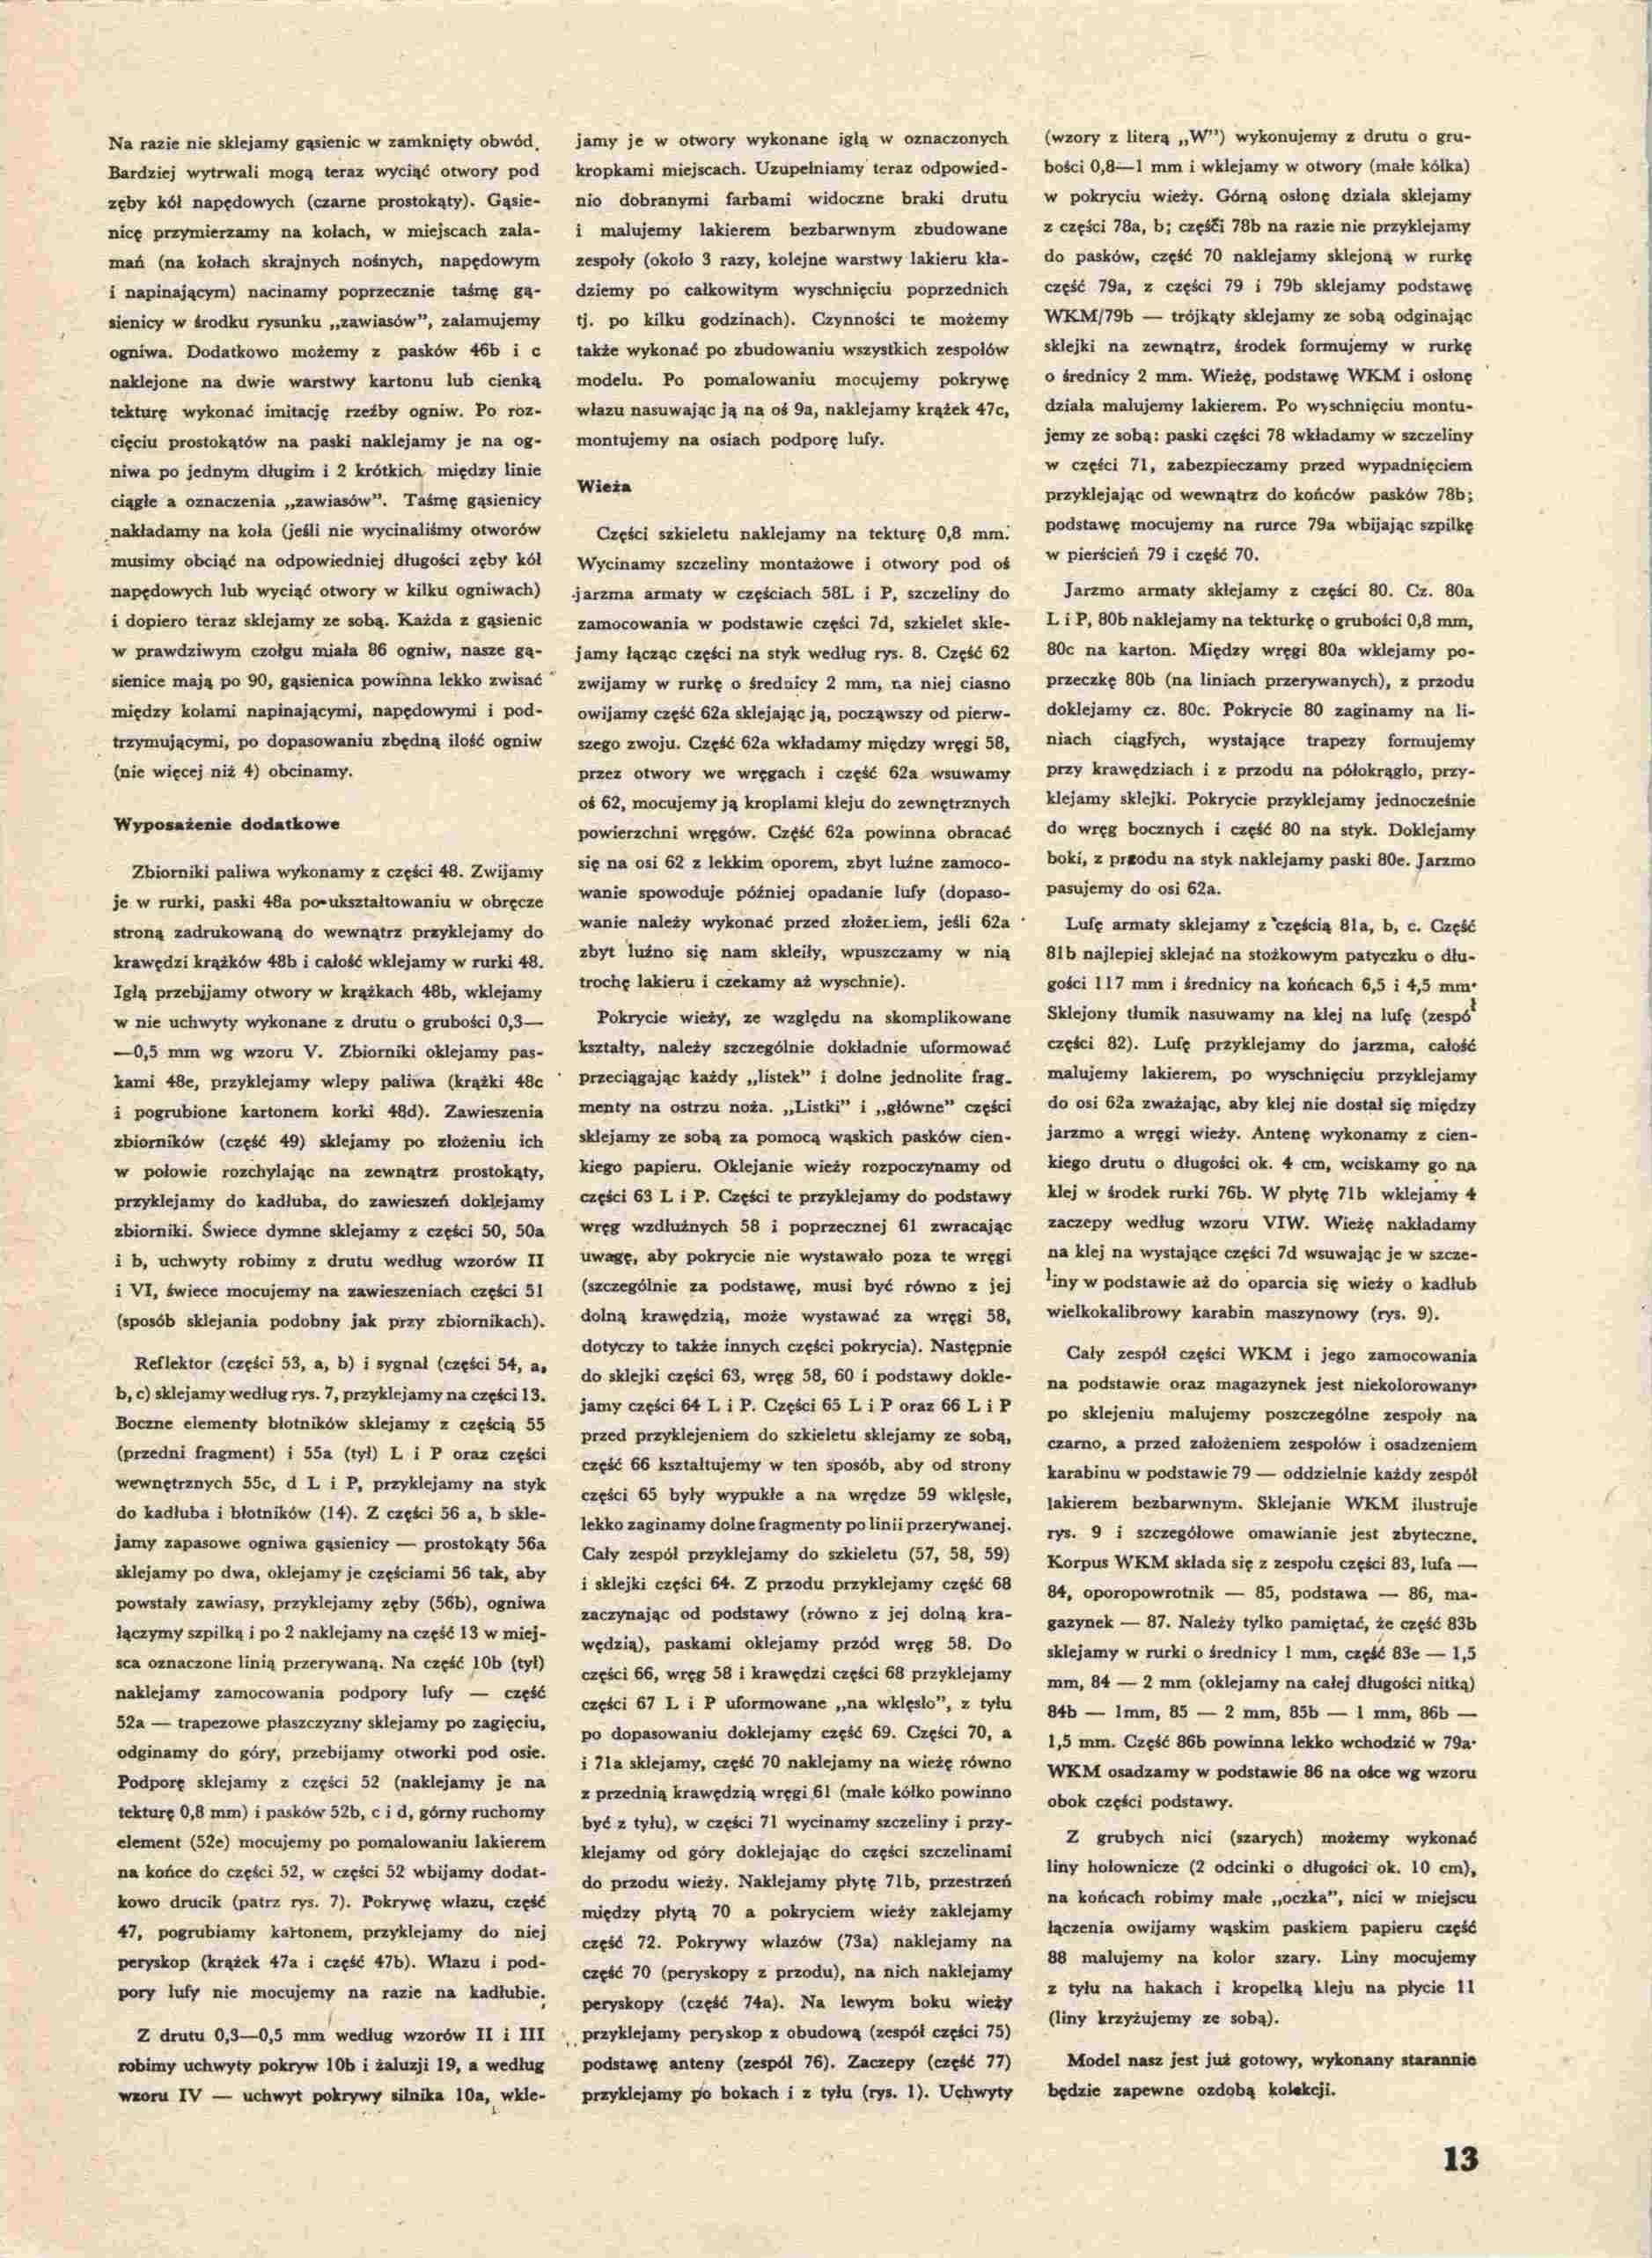 "Maly Modelarz" 9, 1982, 13 с.